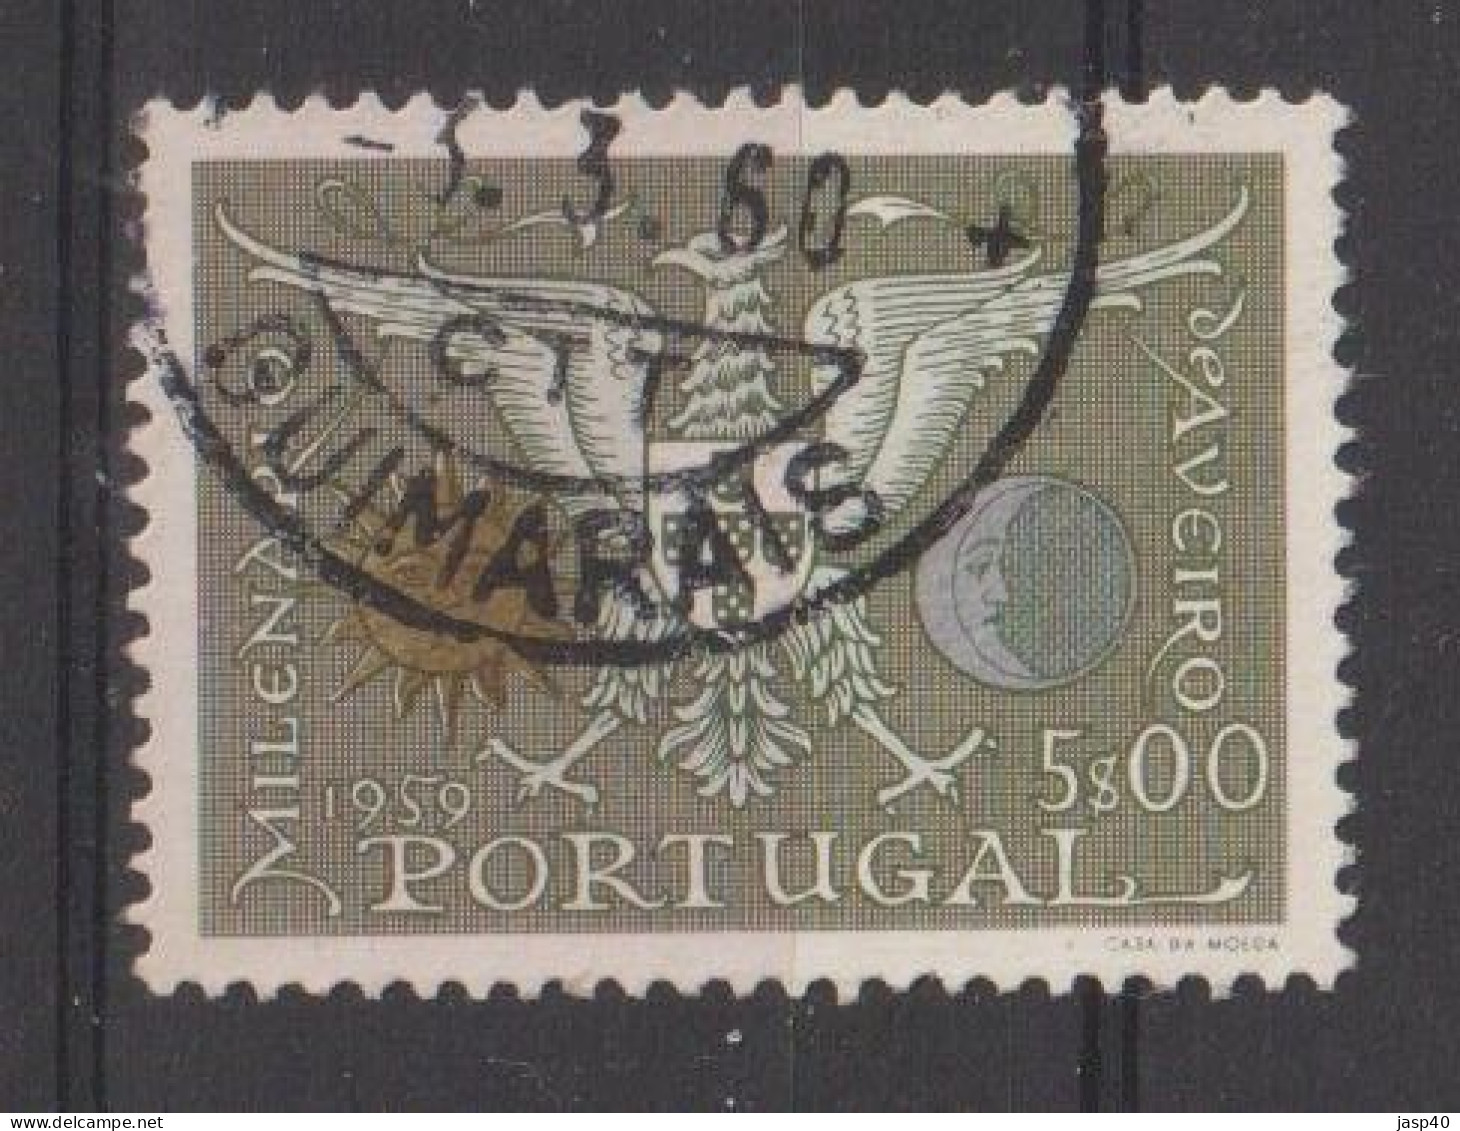 PORTUGAL 848 - POSTMARKS OF PORTUGAL - GUIMARÃES - Usado